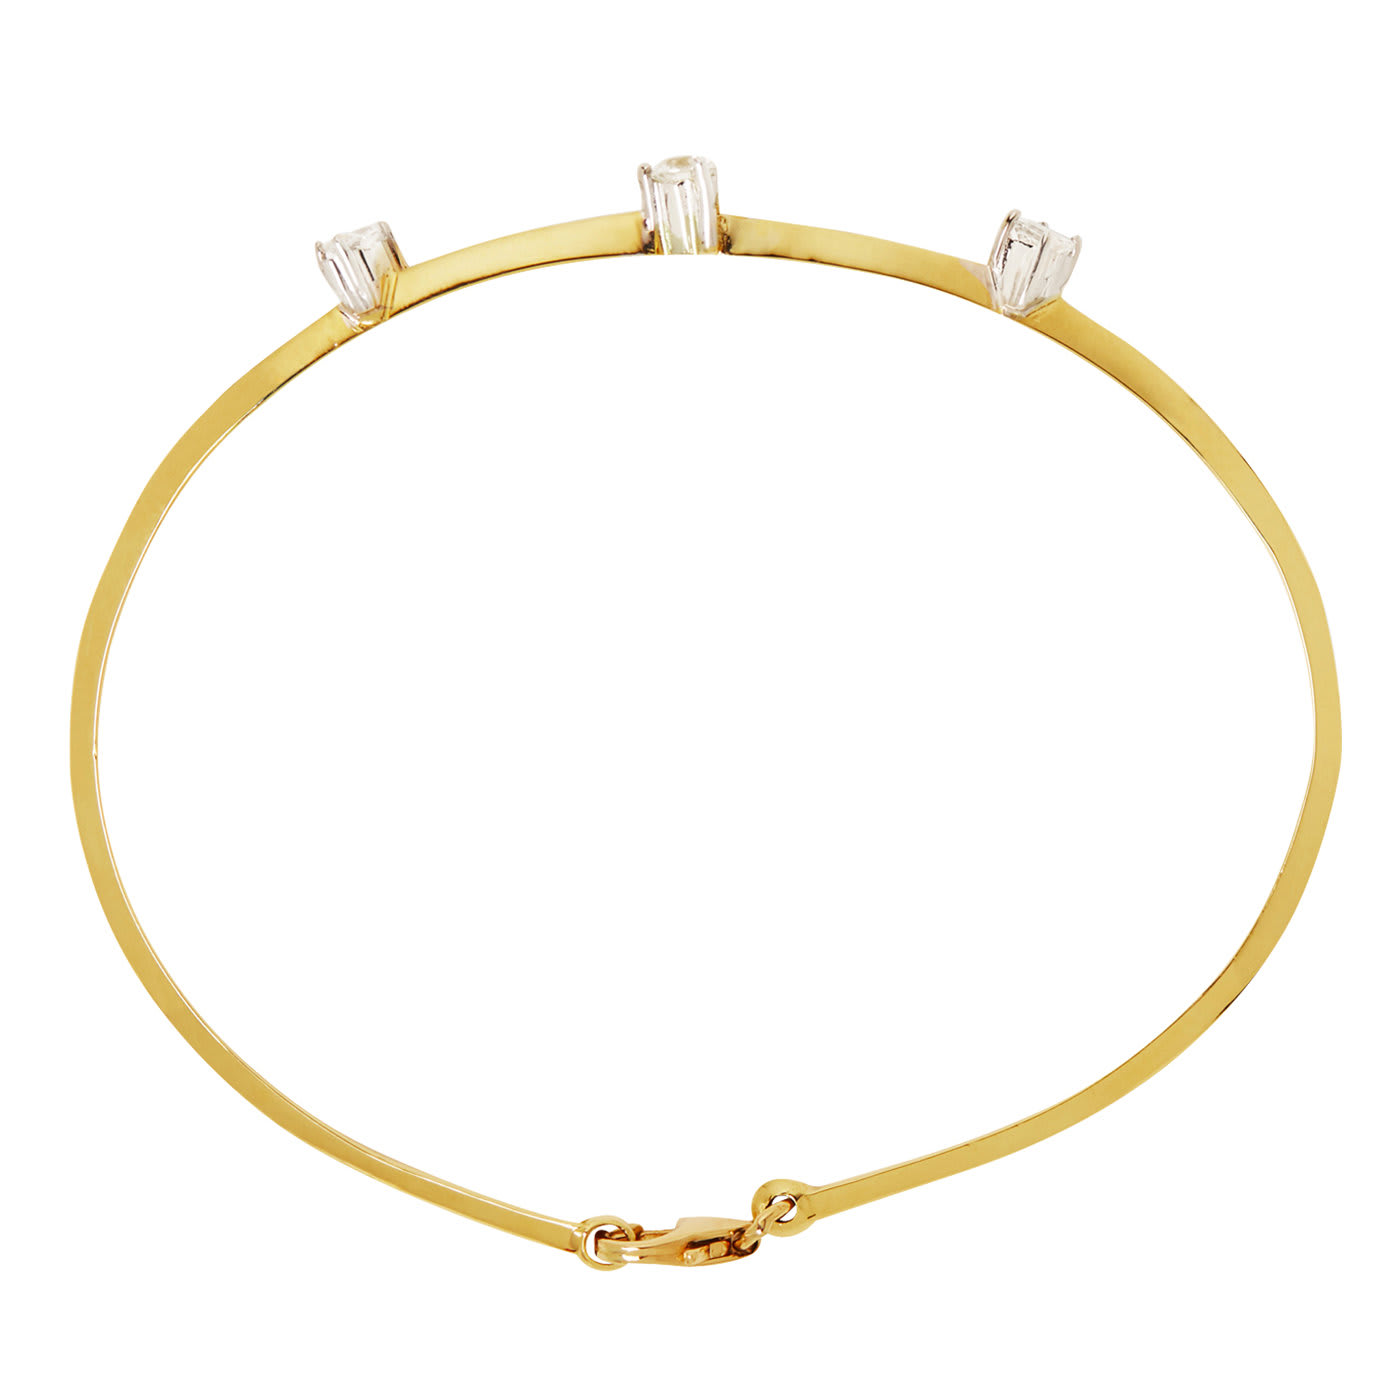 Balance Yellow Gold Bracelet - Paola Grande